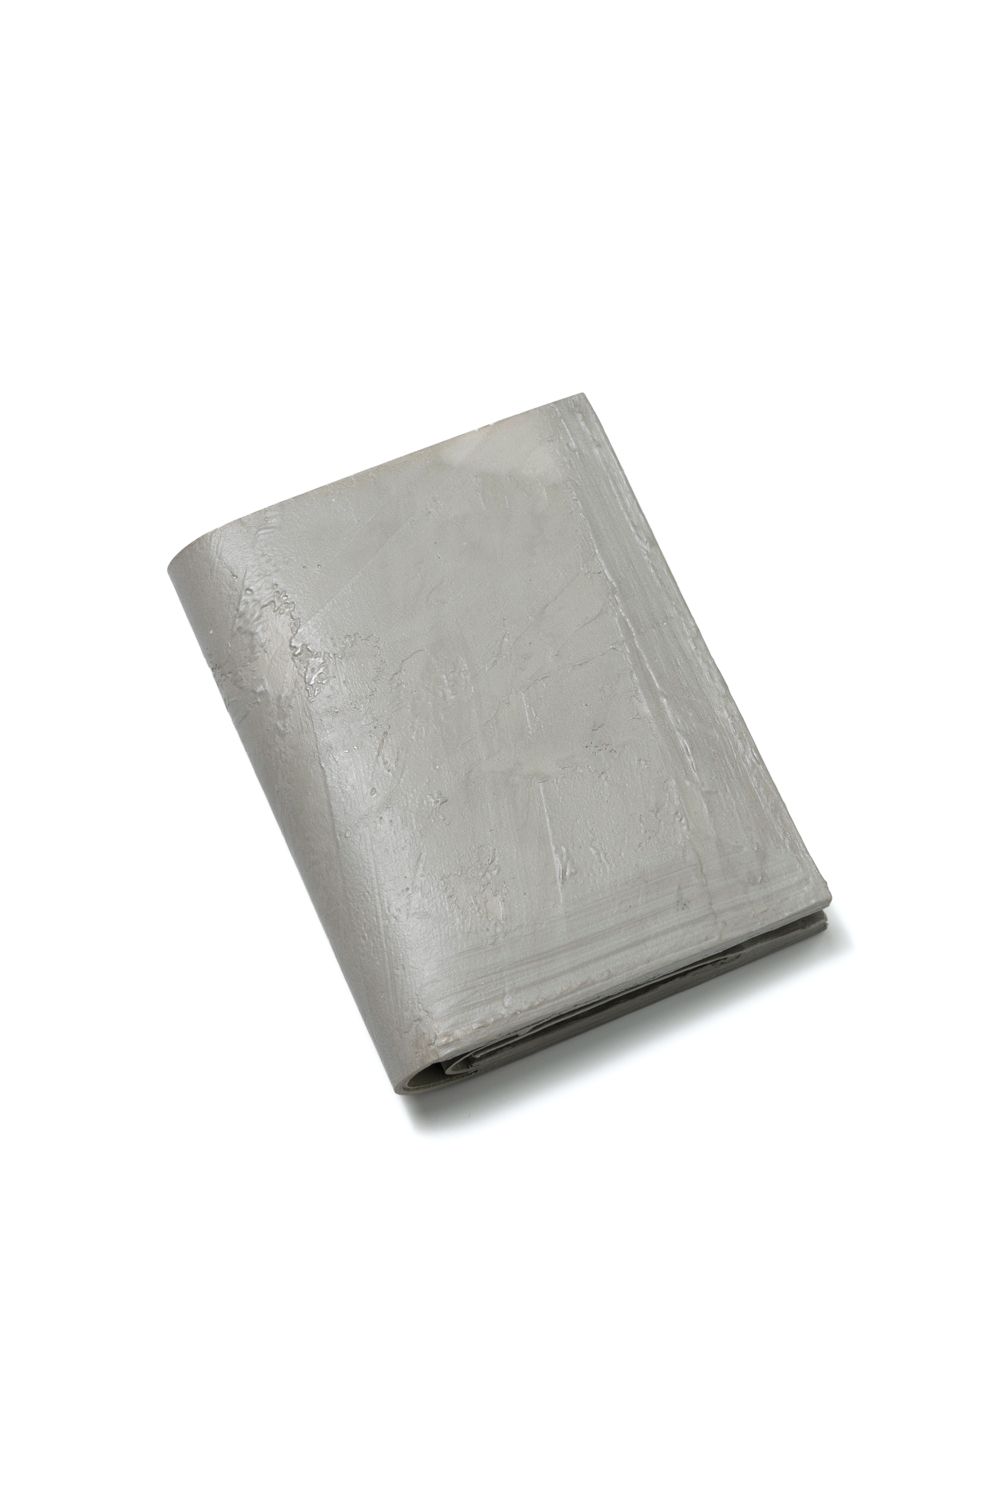 KAGARI YUSUKE - 二つ折り財布 [黒い壁] / mw20-bk | BONITA ONLINE STORE